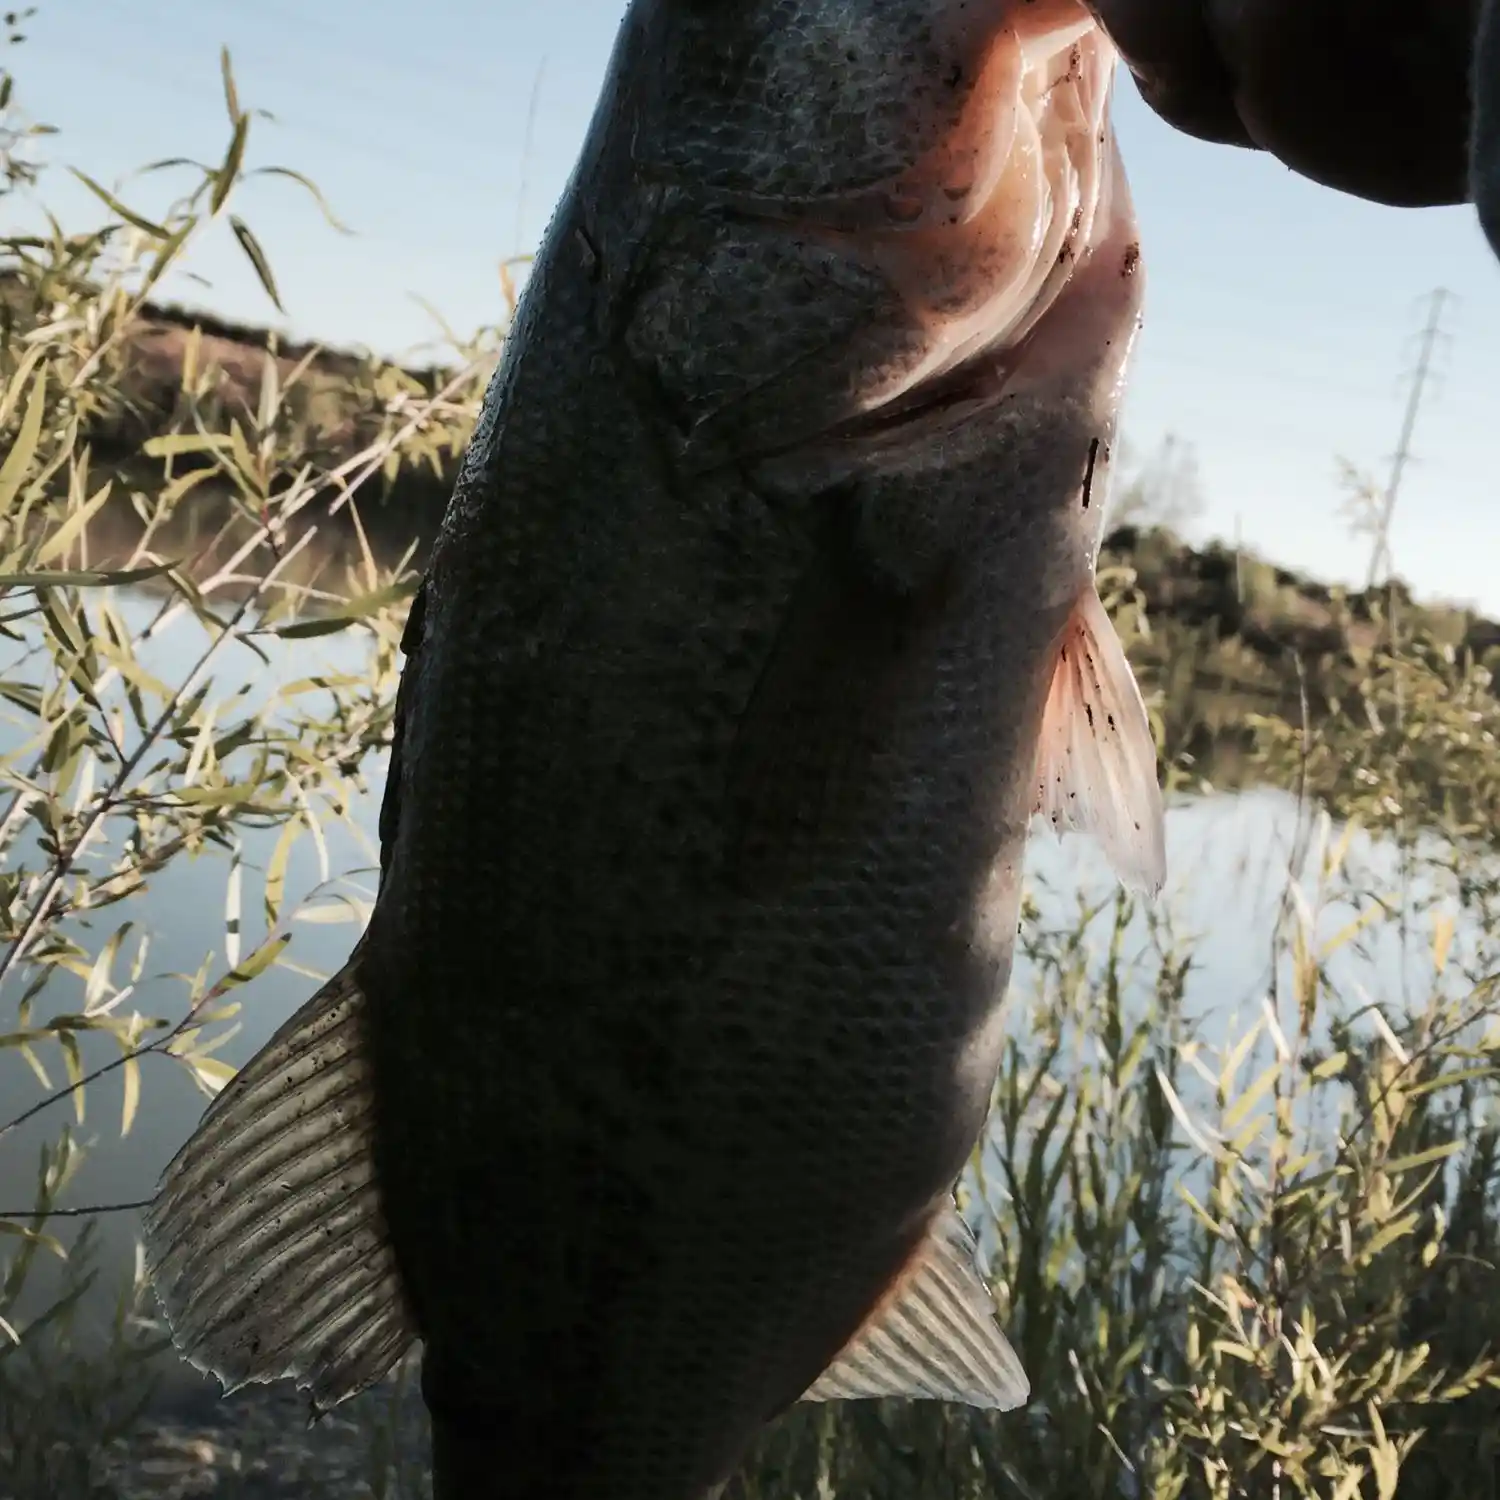 Fishing in Fresno County  Places to Fish near Fresno & Clovis